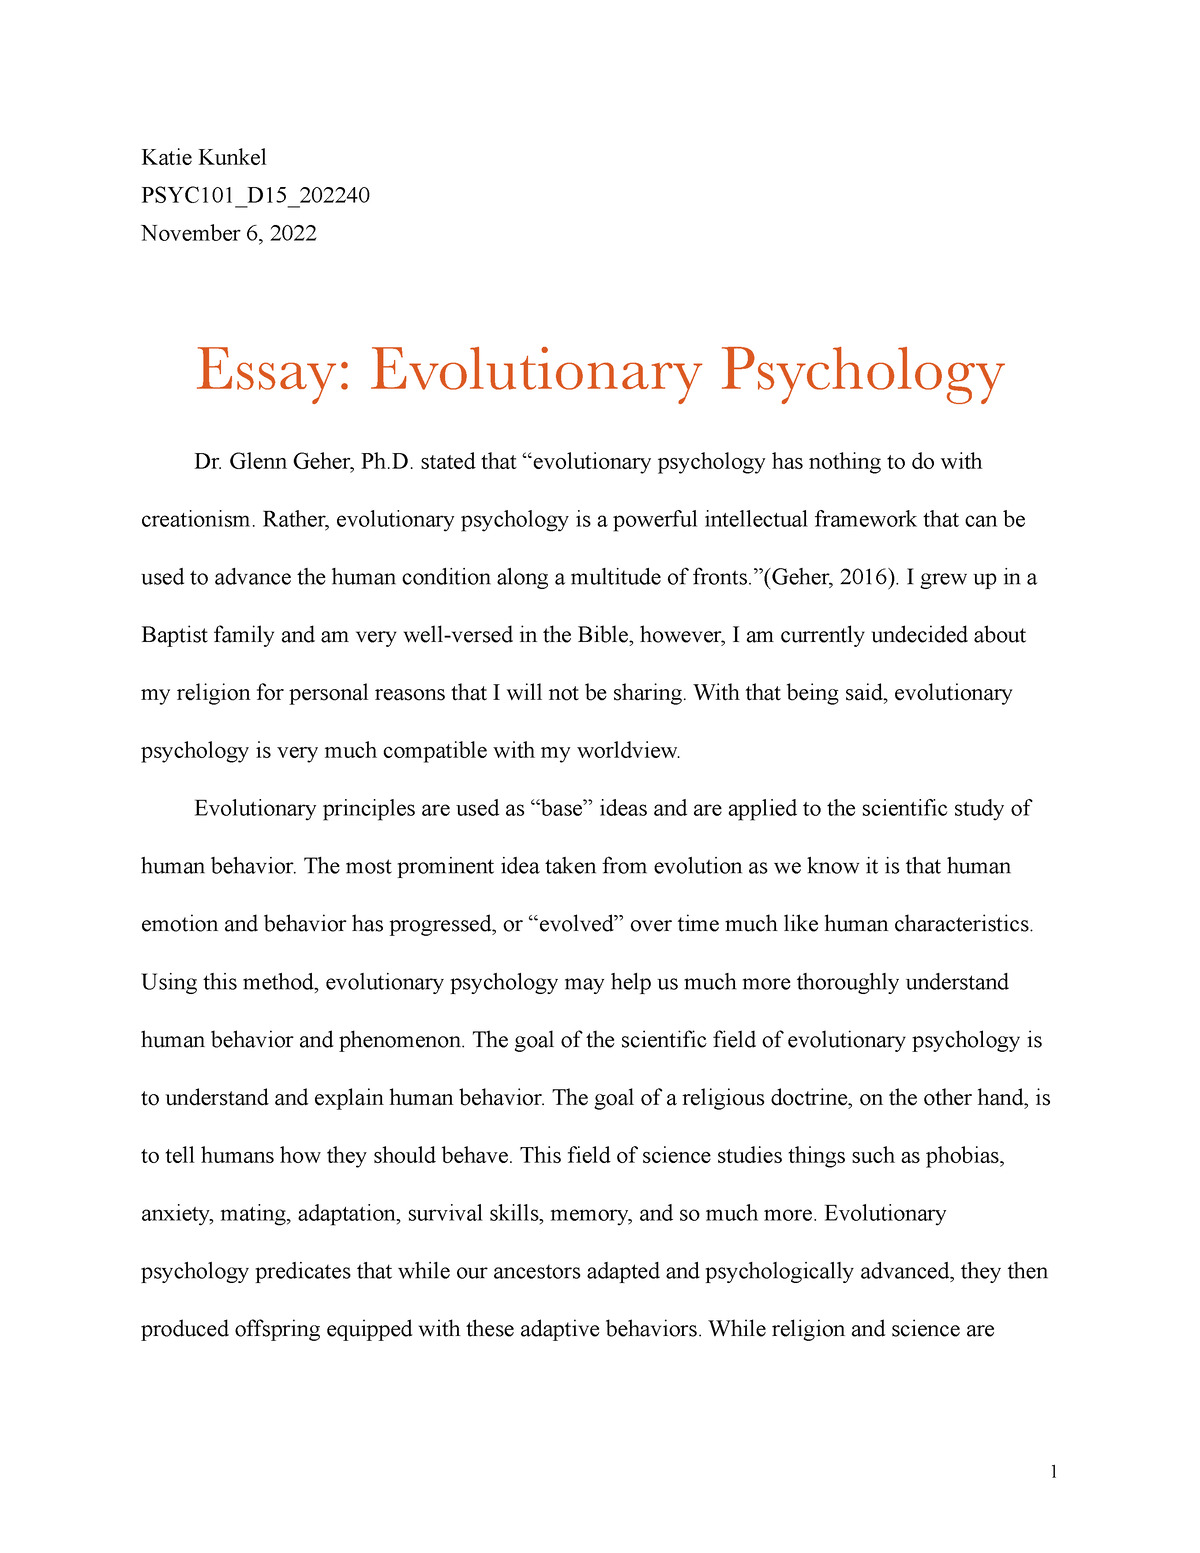 essay evolutionary psychology